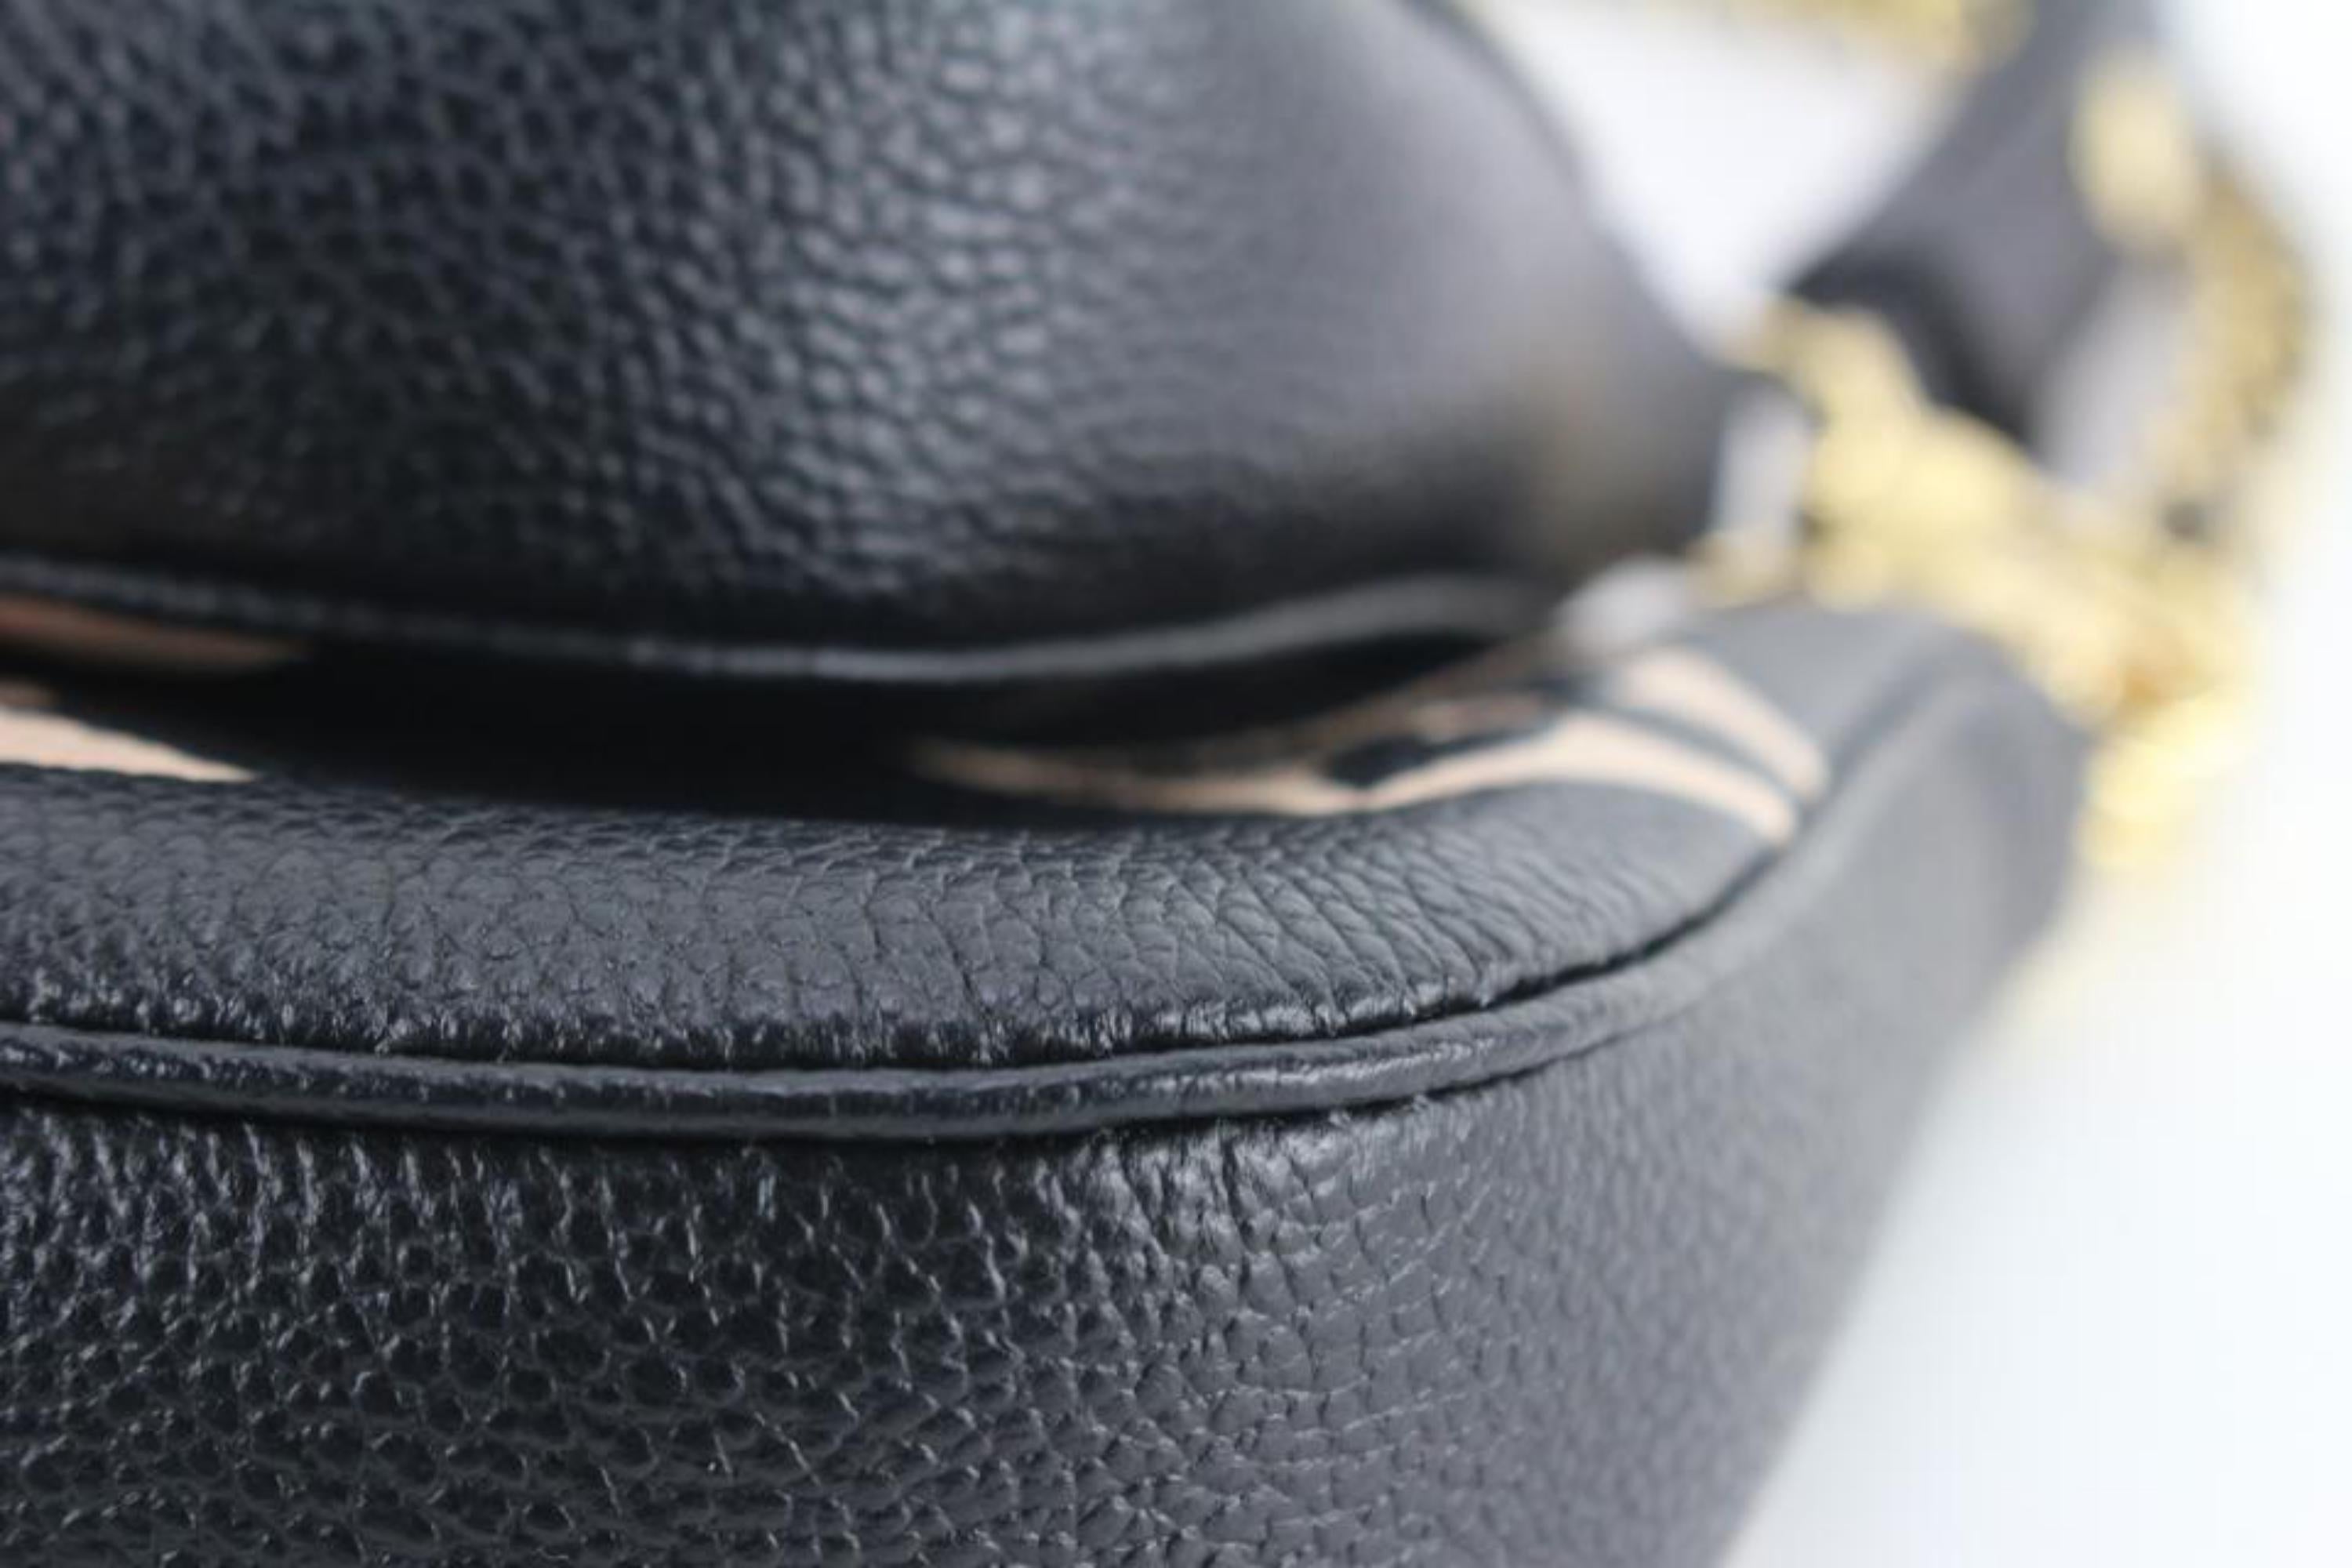 Louis Vuitton Black Monogram Empreinte Leather Multi Pochette Gold